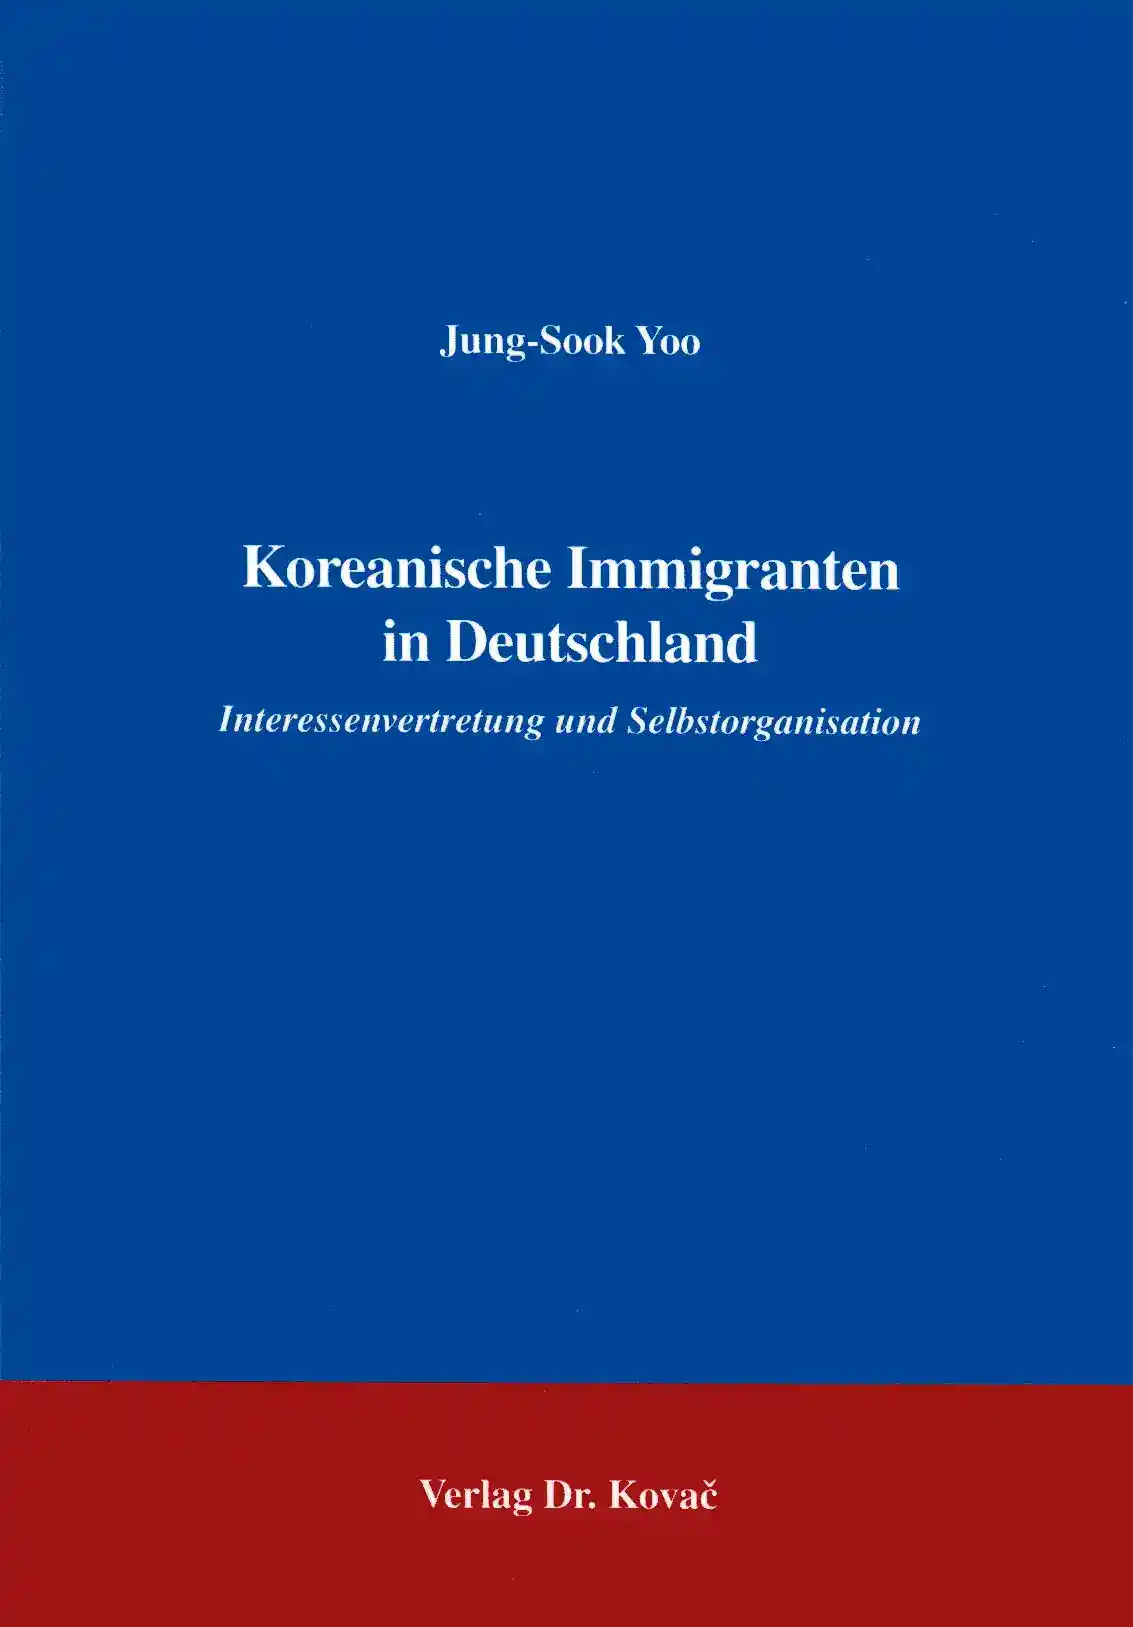 Koreanische Immigranten in Deutschland (Forschungsarbeit)